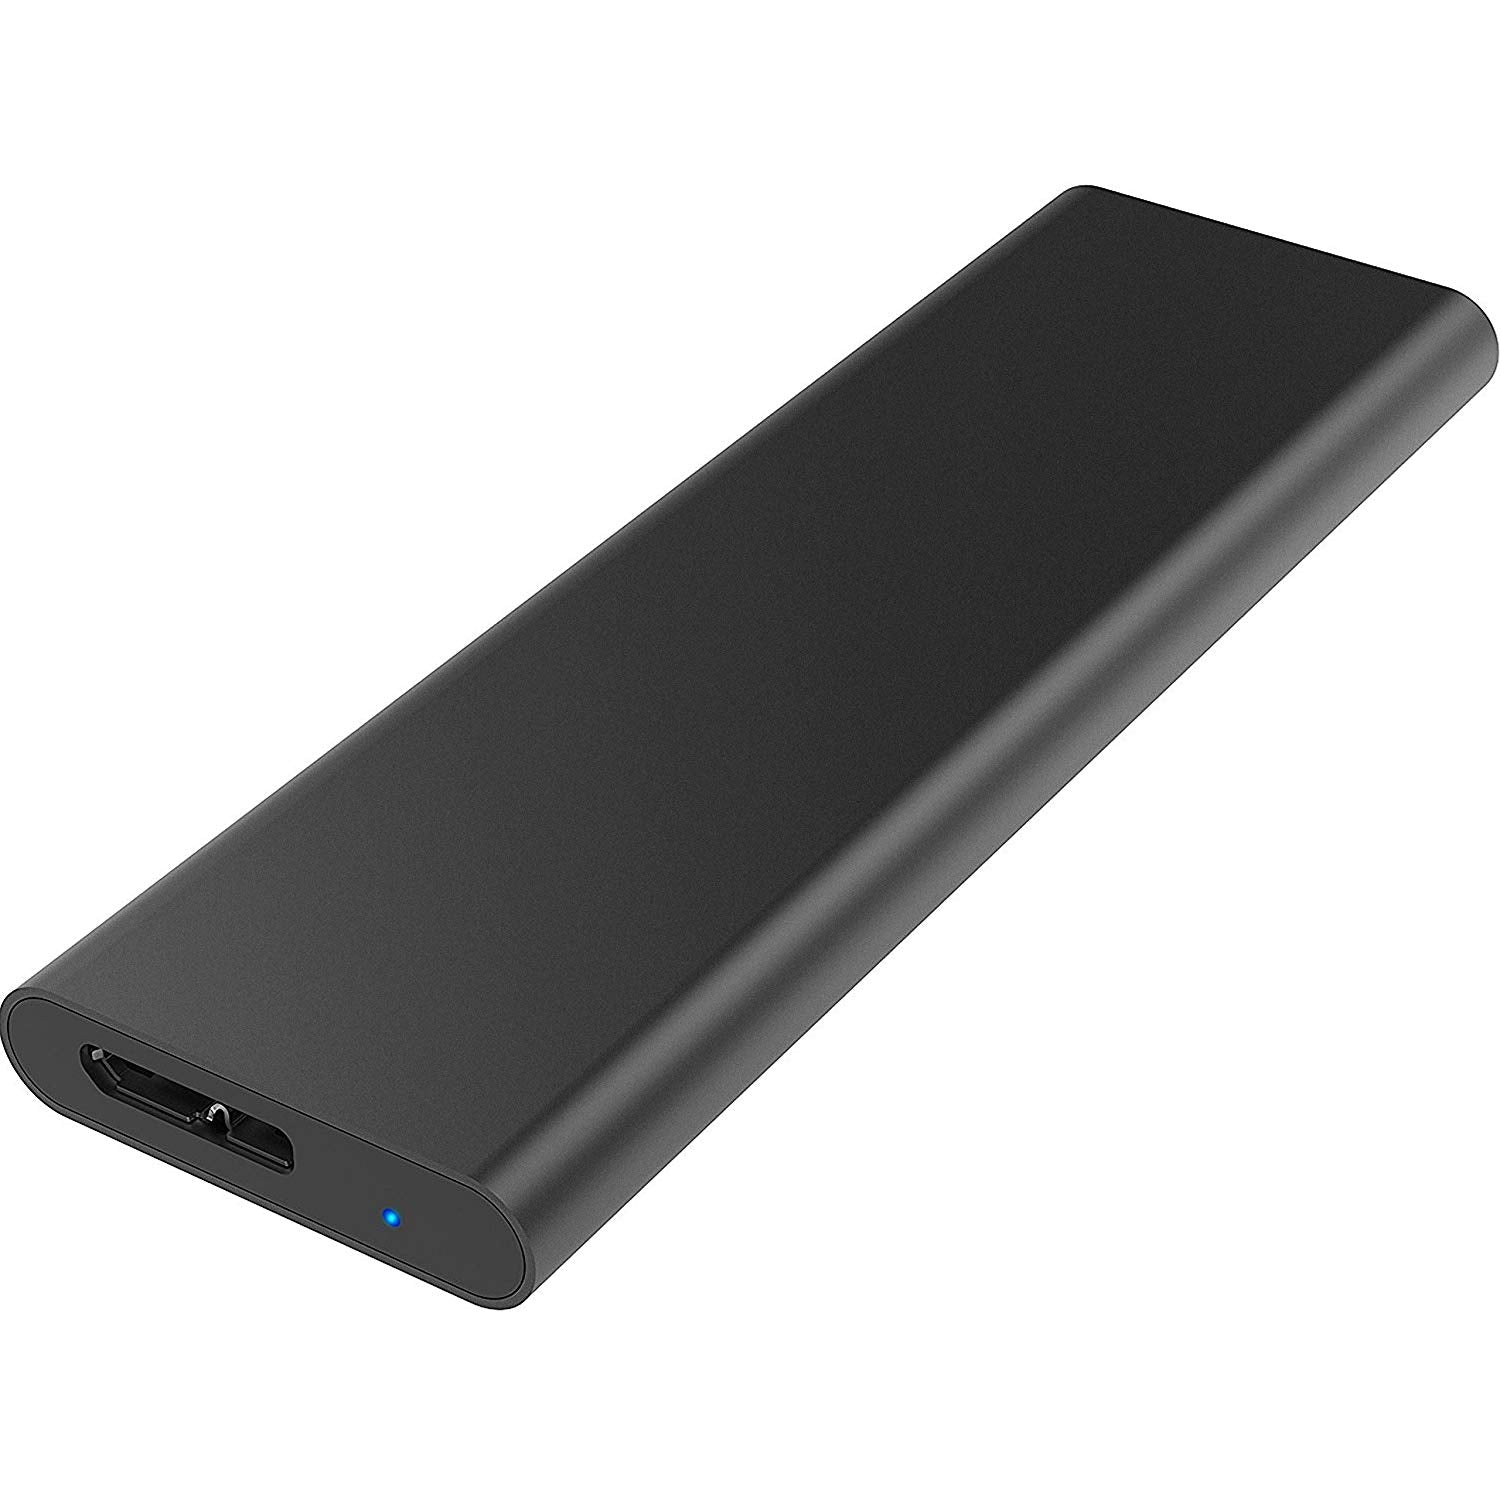 M.2 SSD [NGFF] to USB 3.0 / SATA III 2.5-Inch Enclosure Adapter - Sabrent